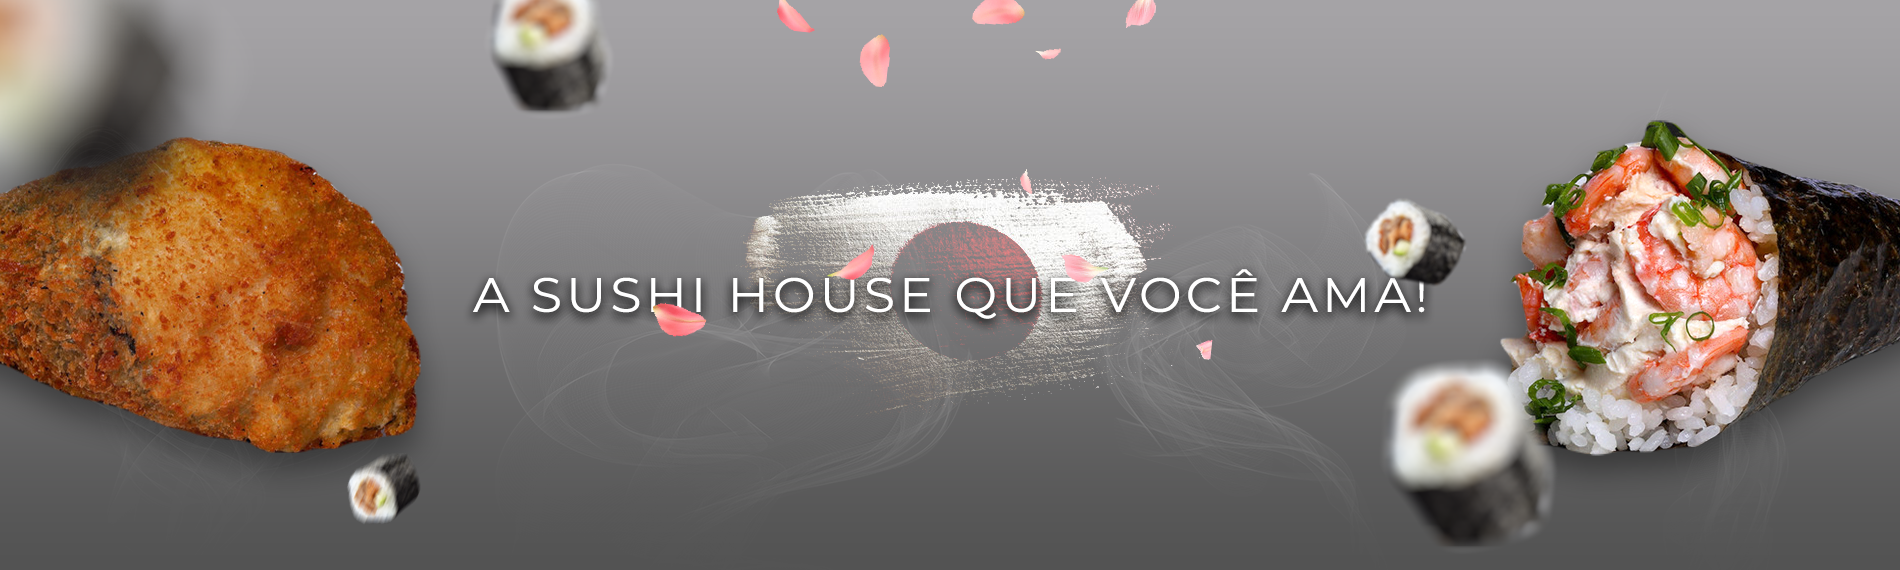 banner da empresa Yali Sushi House Nova Parnamirim